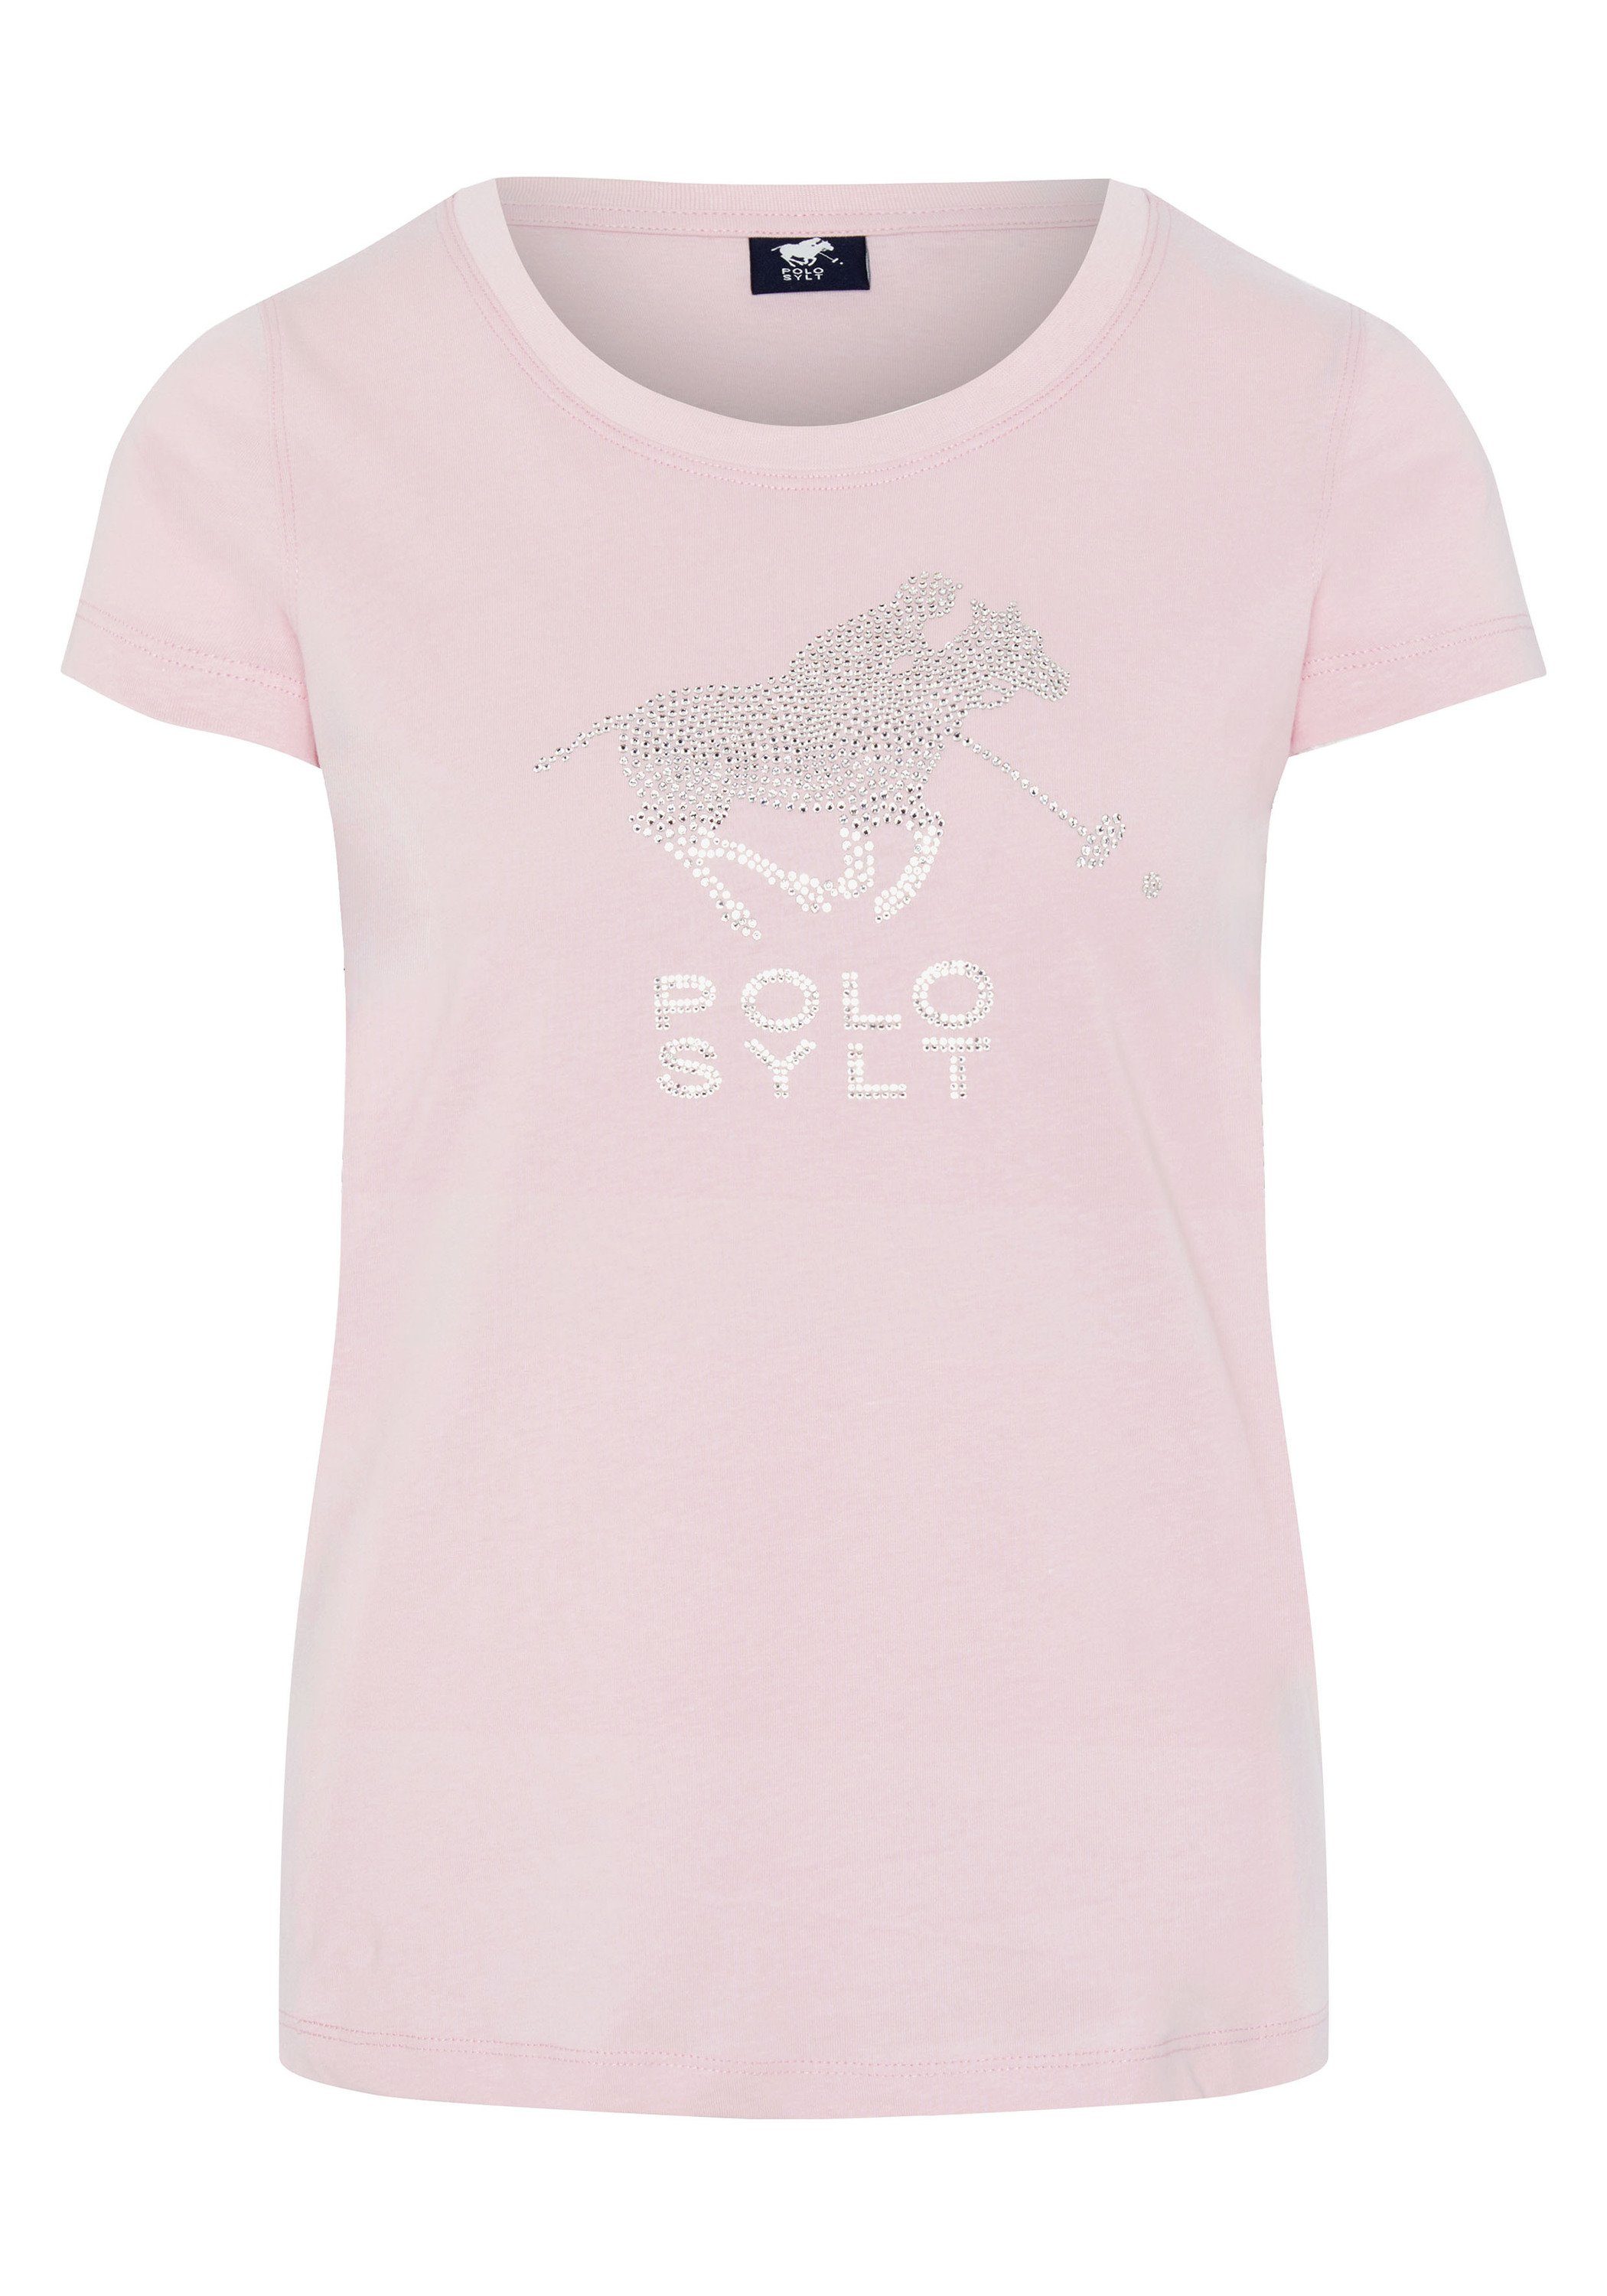 T-Shirt Strasssteinen 13-2806 edlen Lady Sylt mit Pink Polo